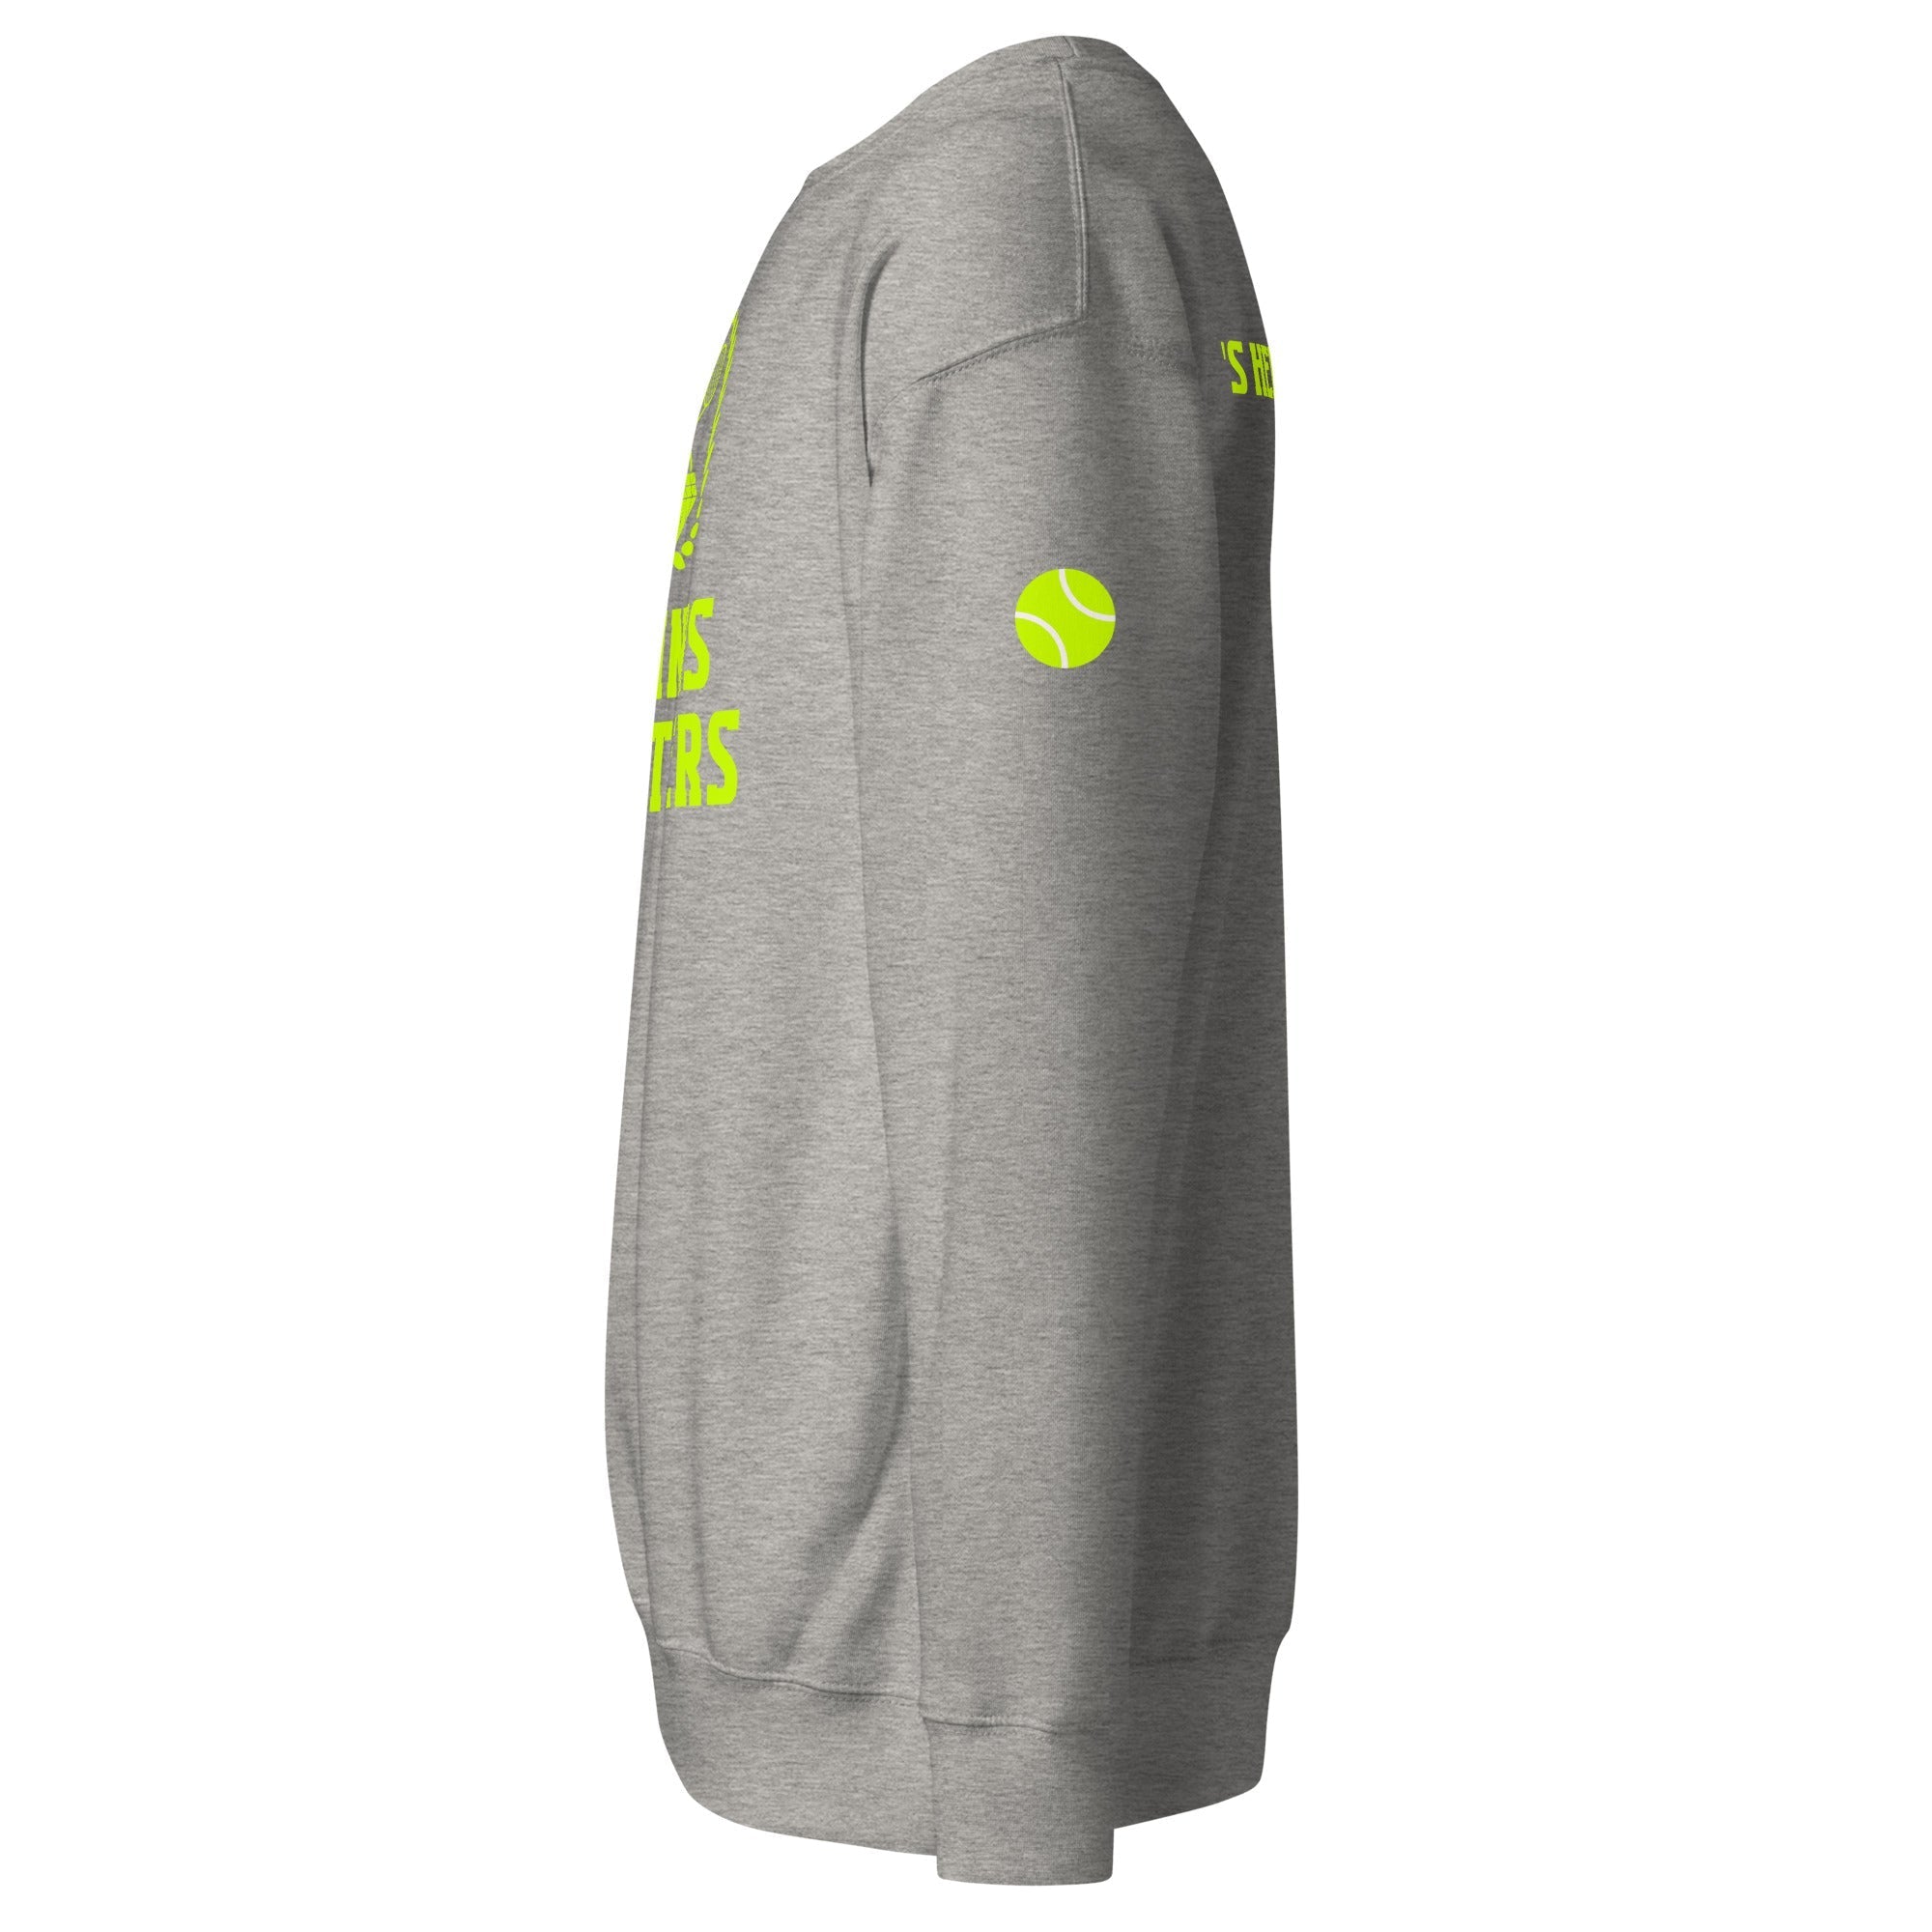 Unisex Premium Sweatshirt - Tennis Masters 'S Hertogenbosch - GRAPHIC T-SHIRTS